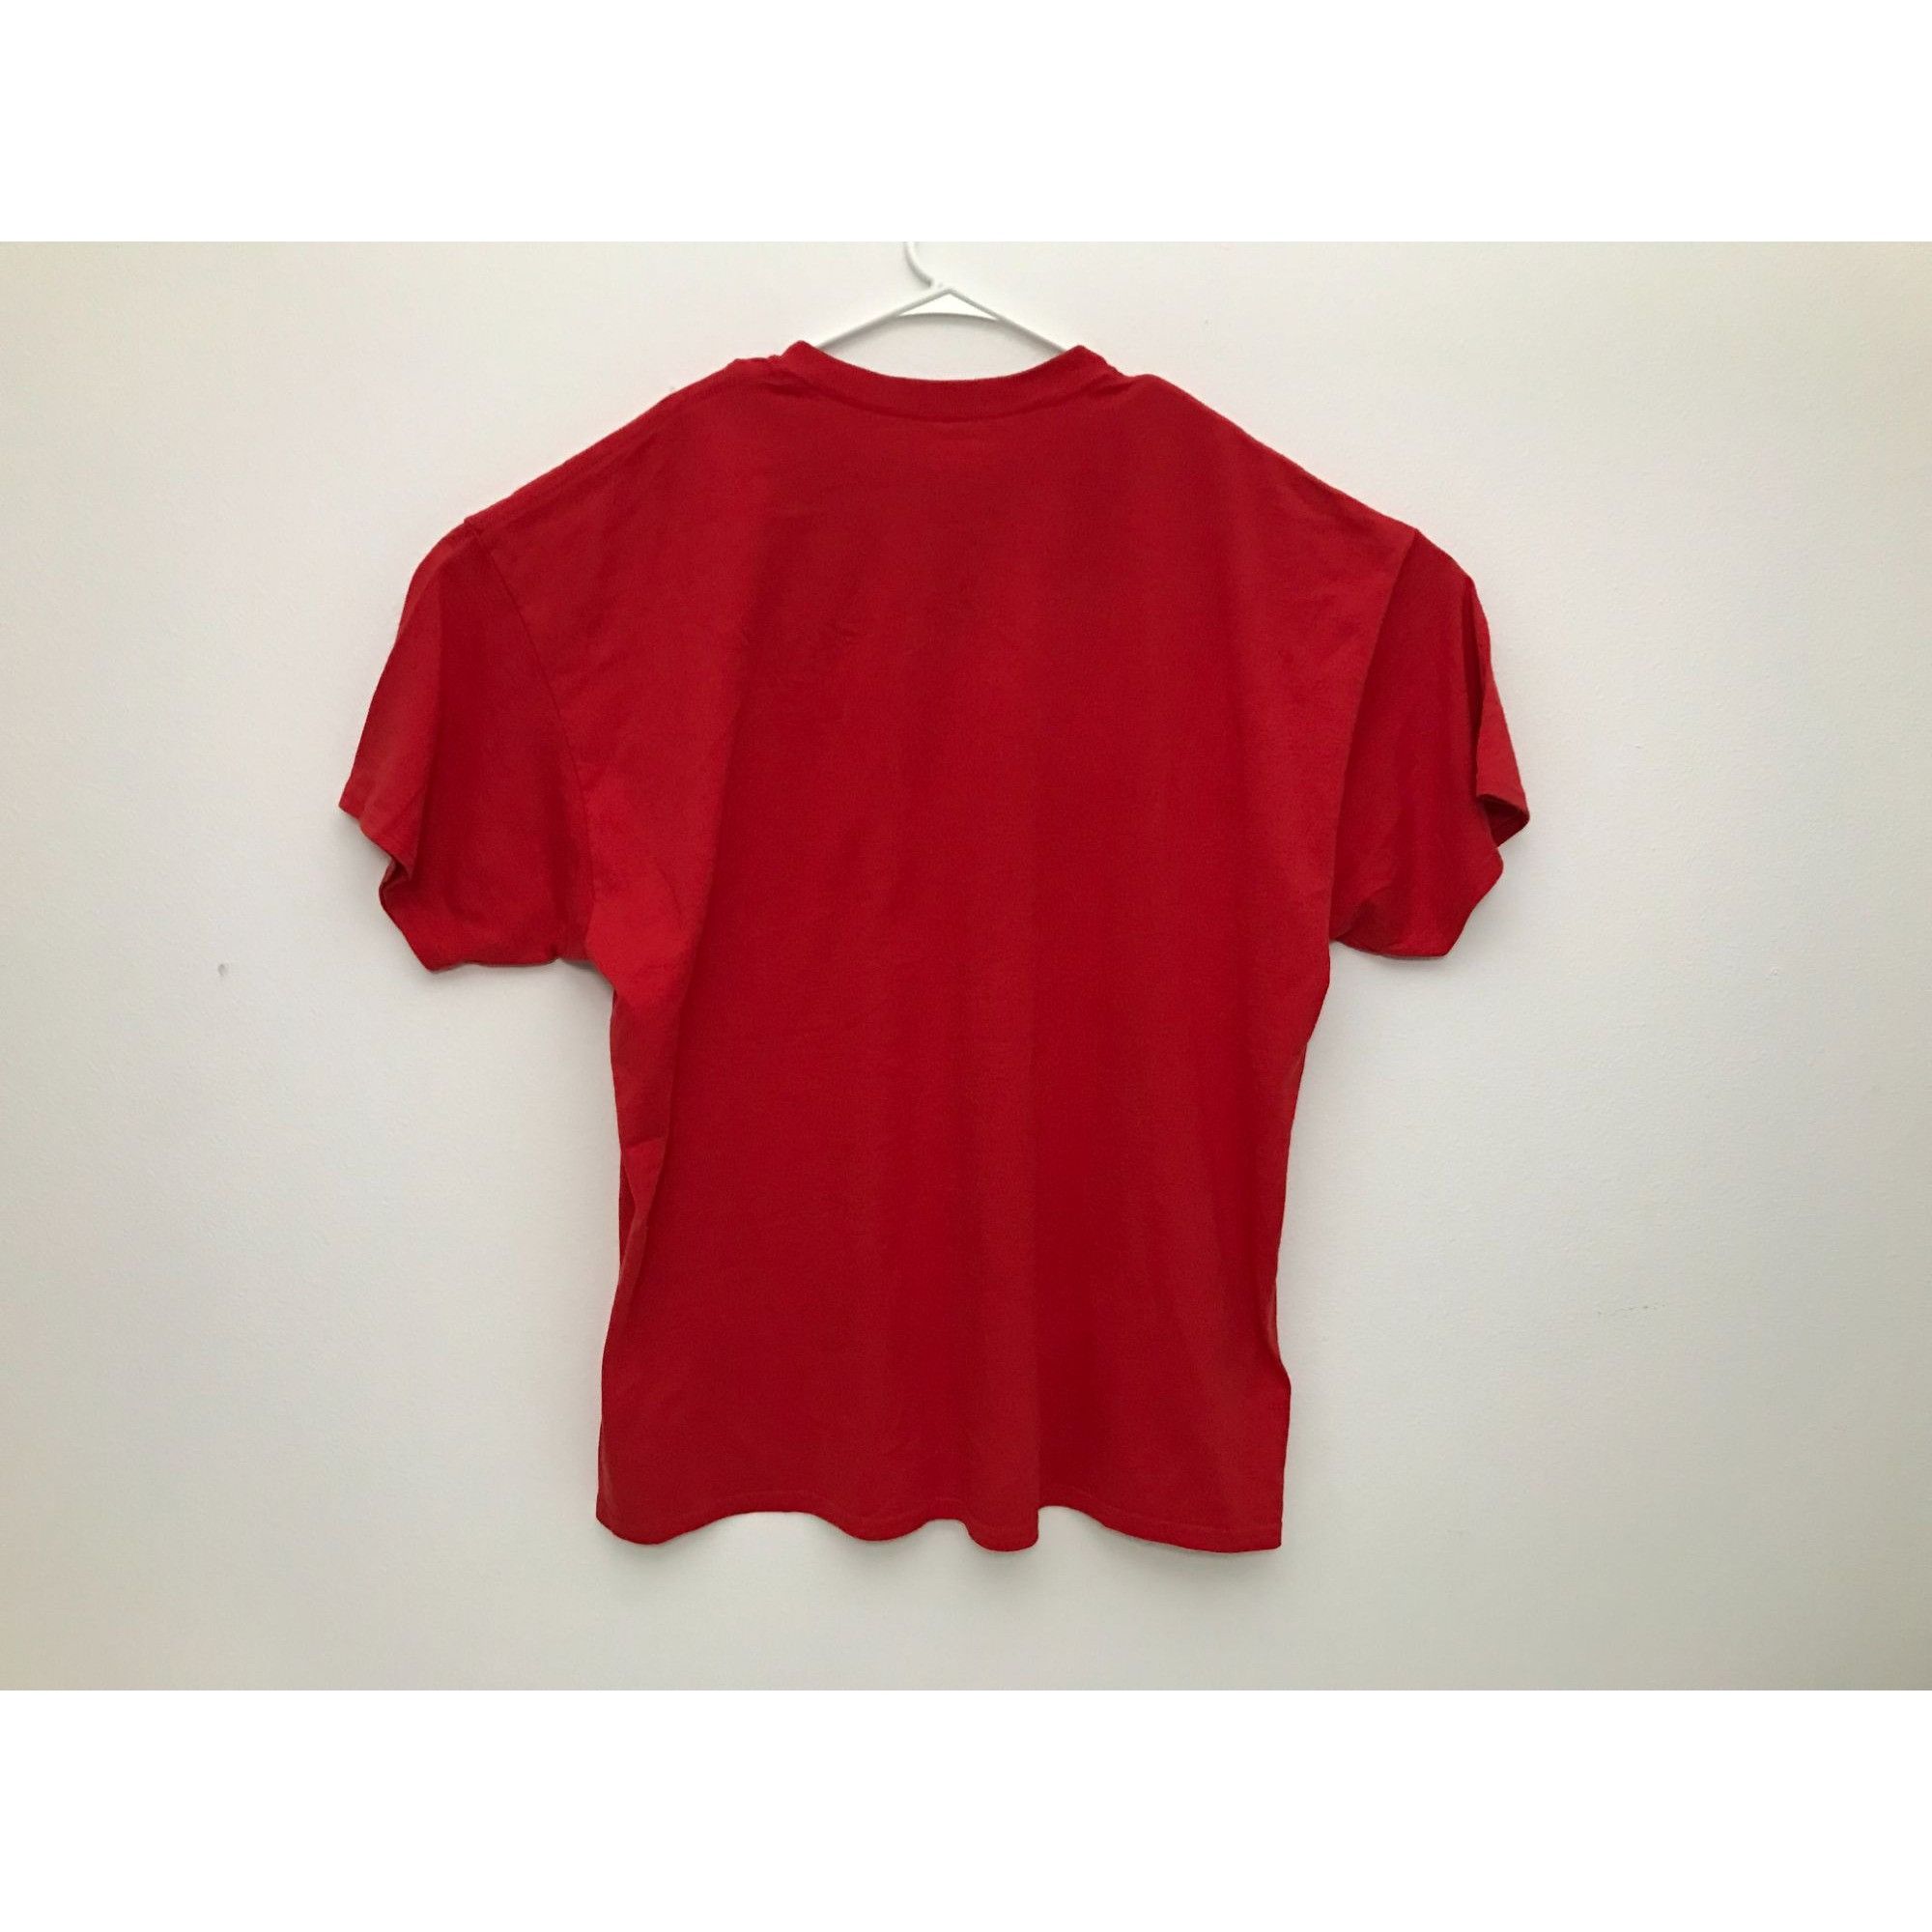 Gildan Gildan Dry Blend NFL Crossplains Mens XXL Red T Shirt *13 Size US XXL / EU 58 / 5 - 4 Preview